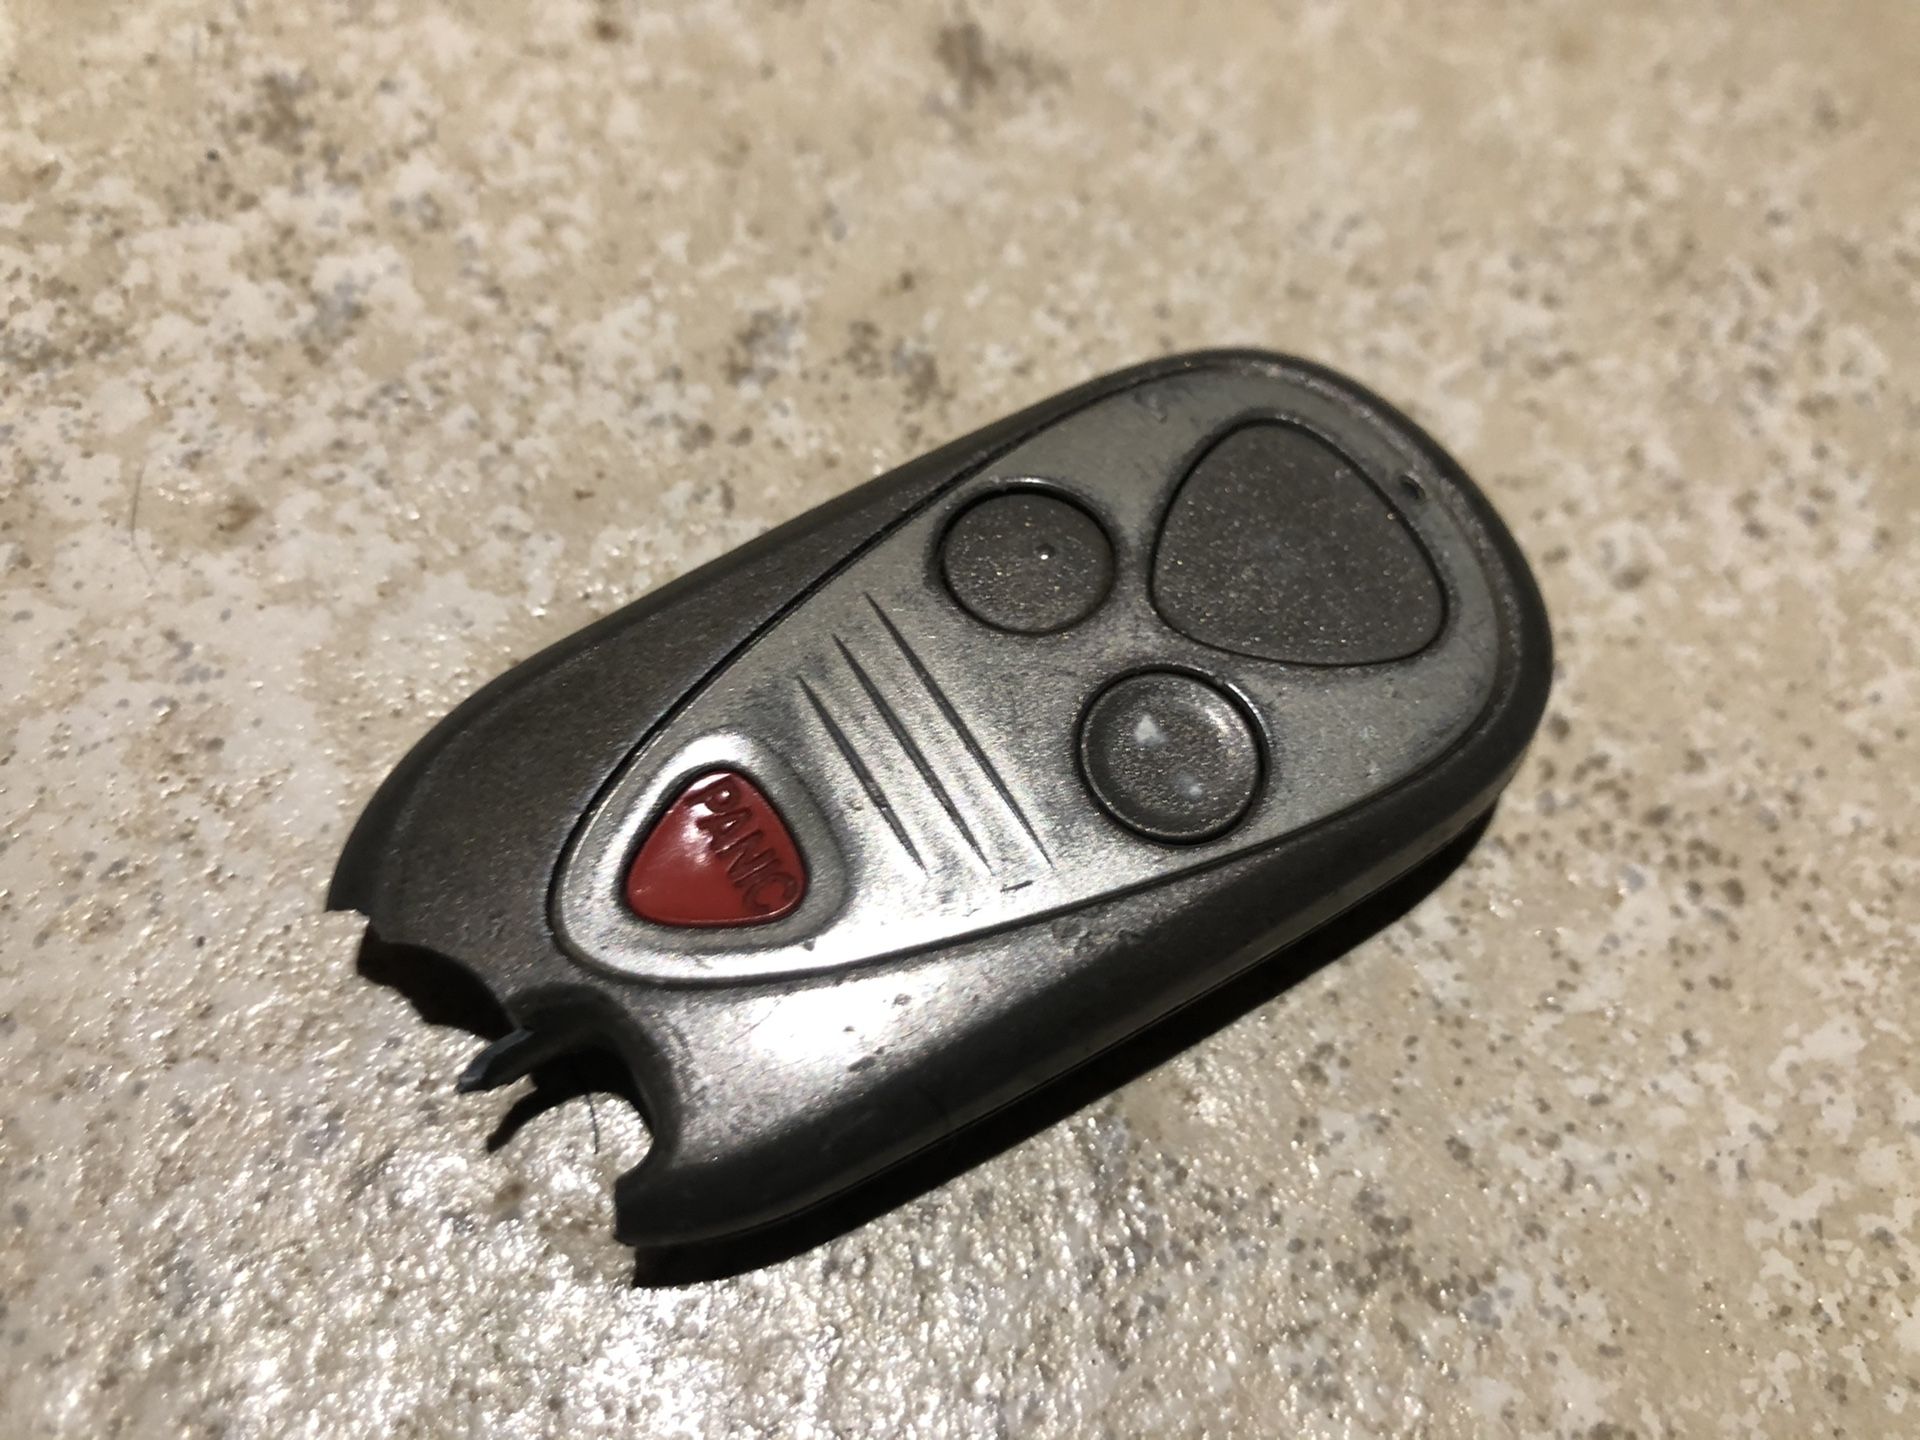 Two 03-06 Acura TL key fob alarm remote